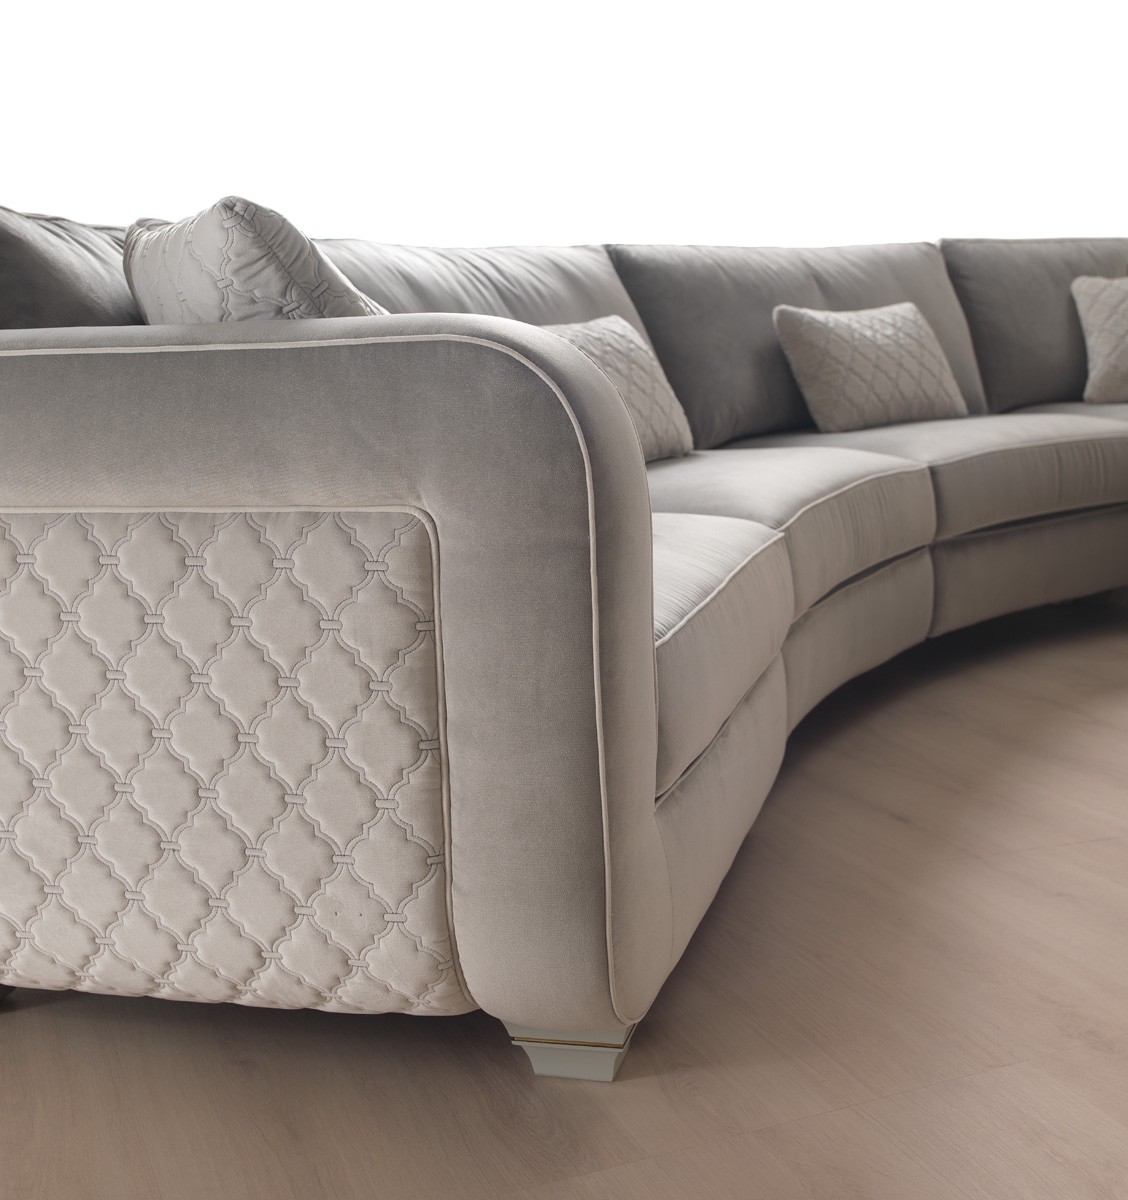 Luxury modern sofa